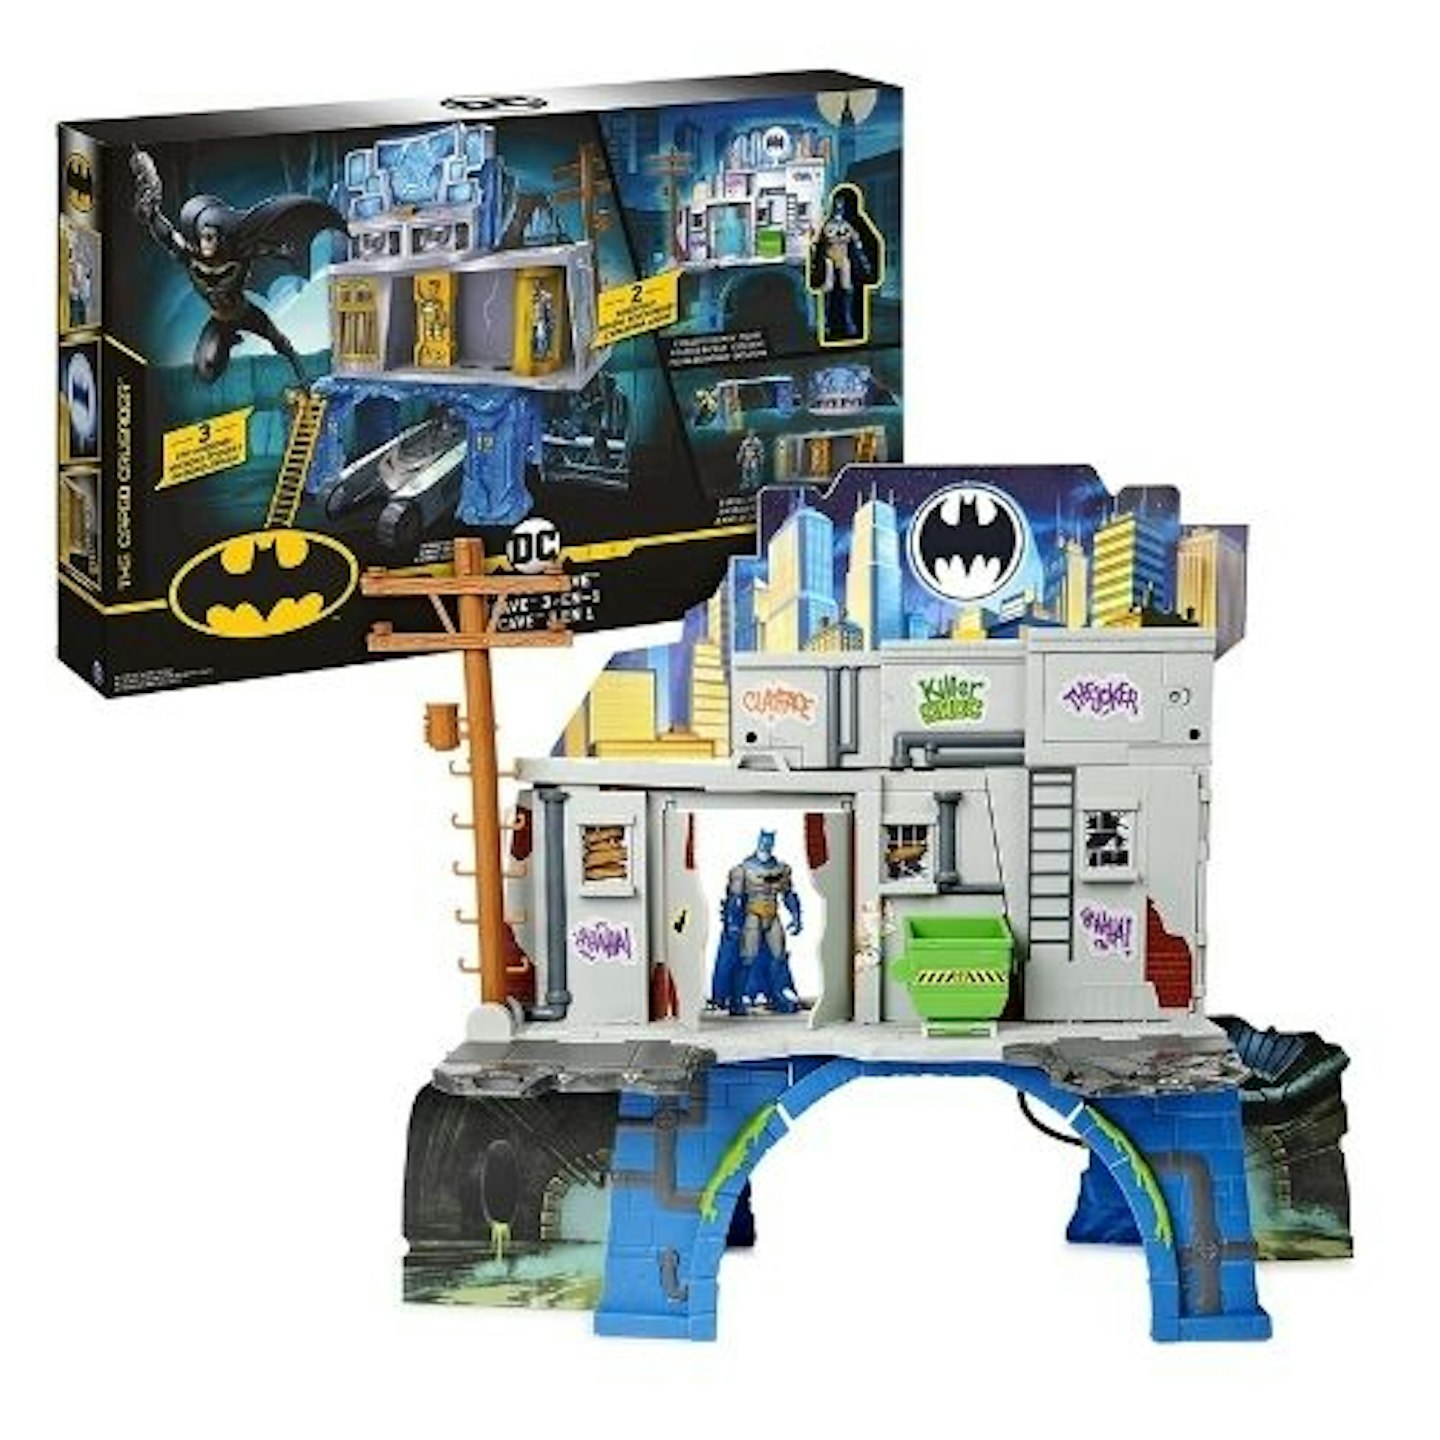  DC Comics BATMAN 3-in-1 Batcave Playset with Exclusive 4-inch BATMAN